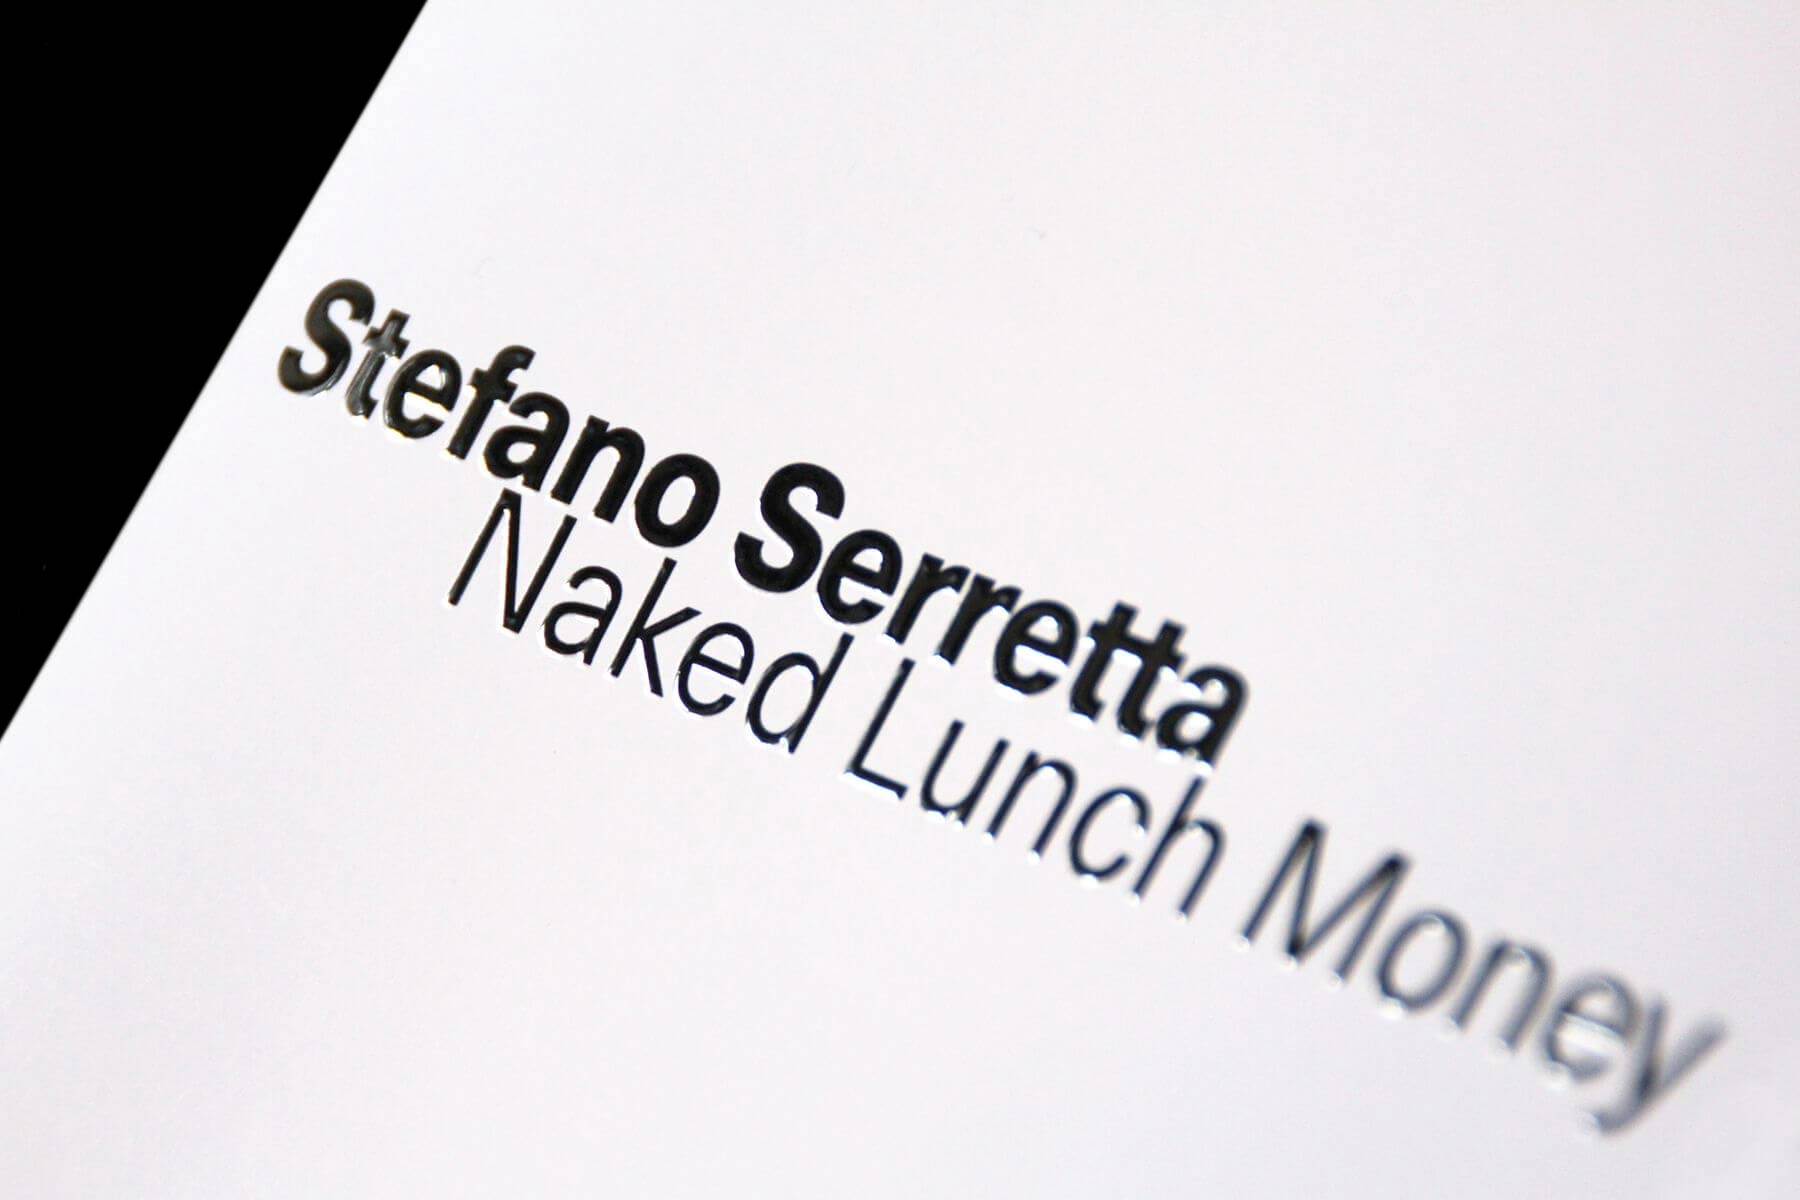 stefano serretta naked lunch money